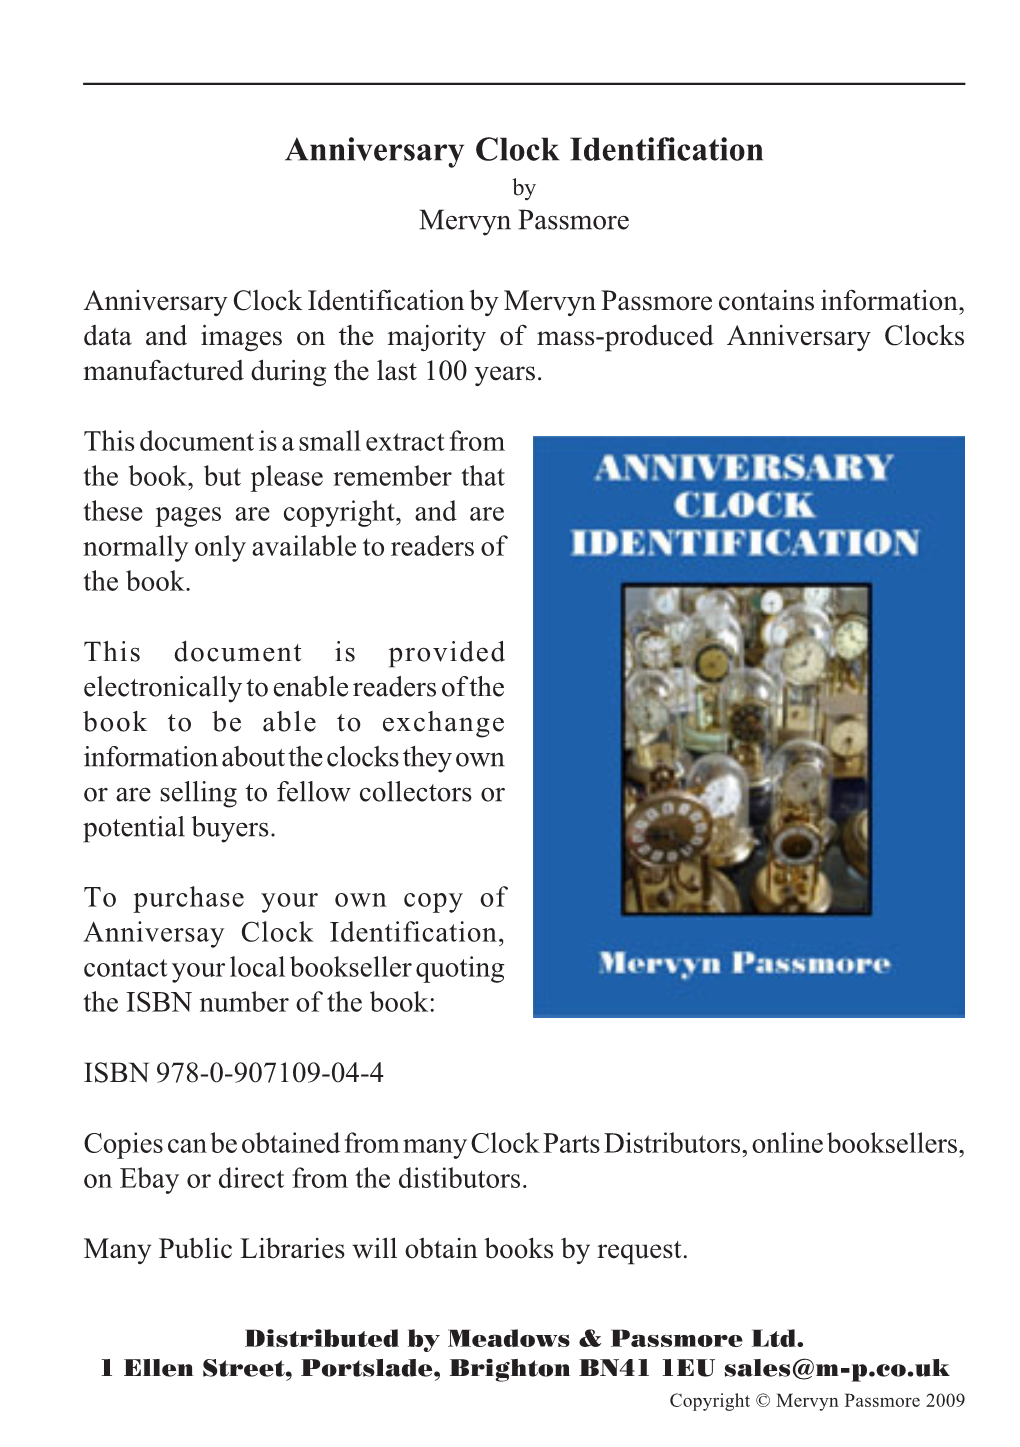 Anniversary Clock Identification by Mervyn Passmore